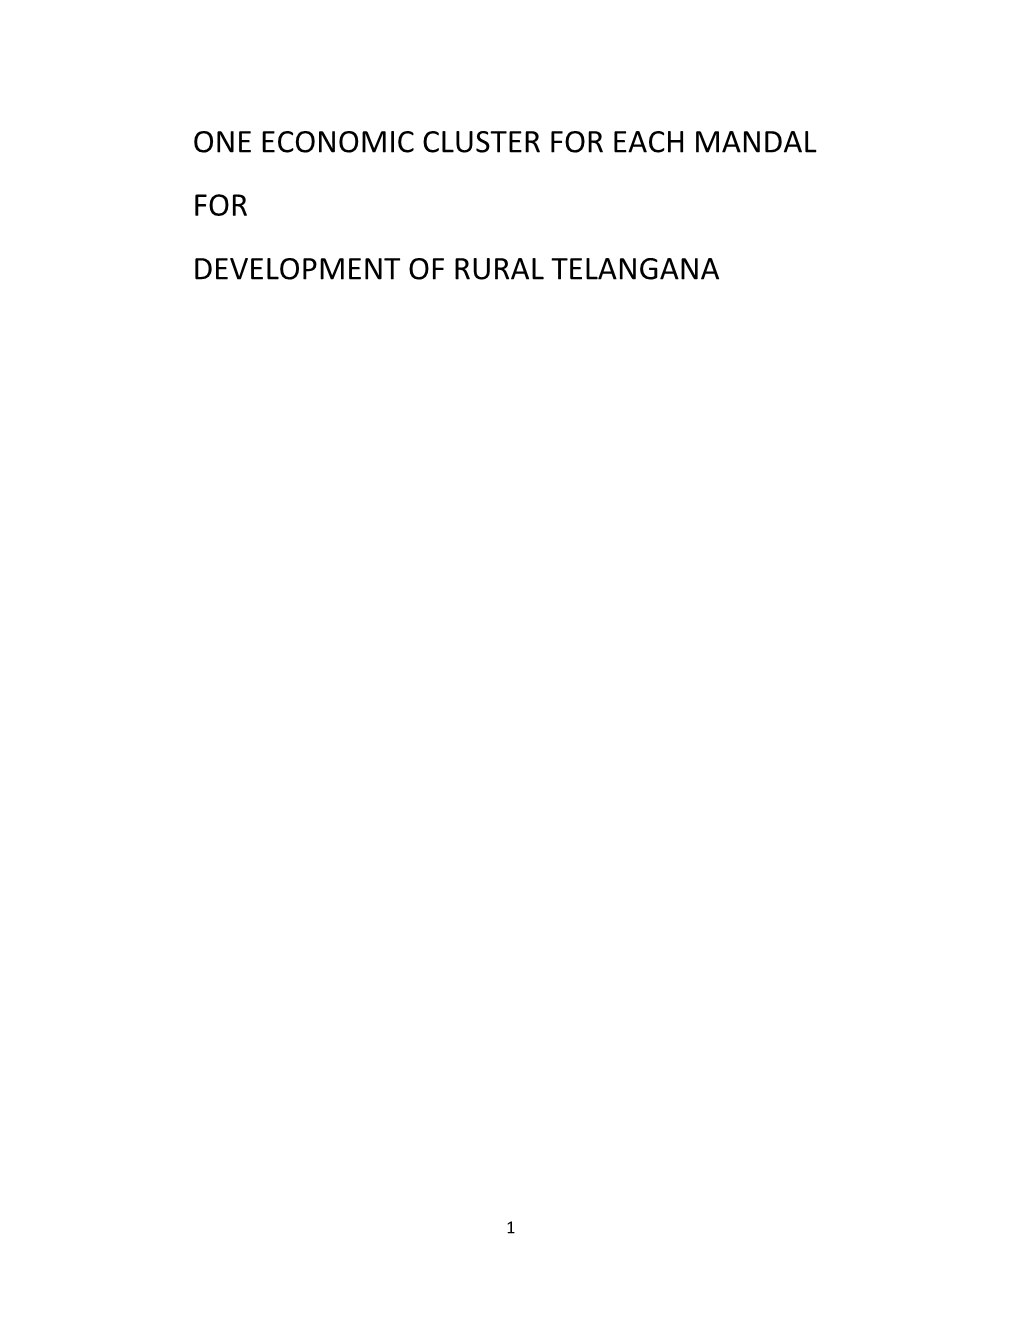 One Economic Cluster for Each Mandal for Development of Rural Telangana